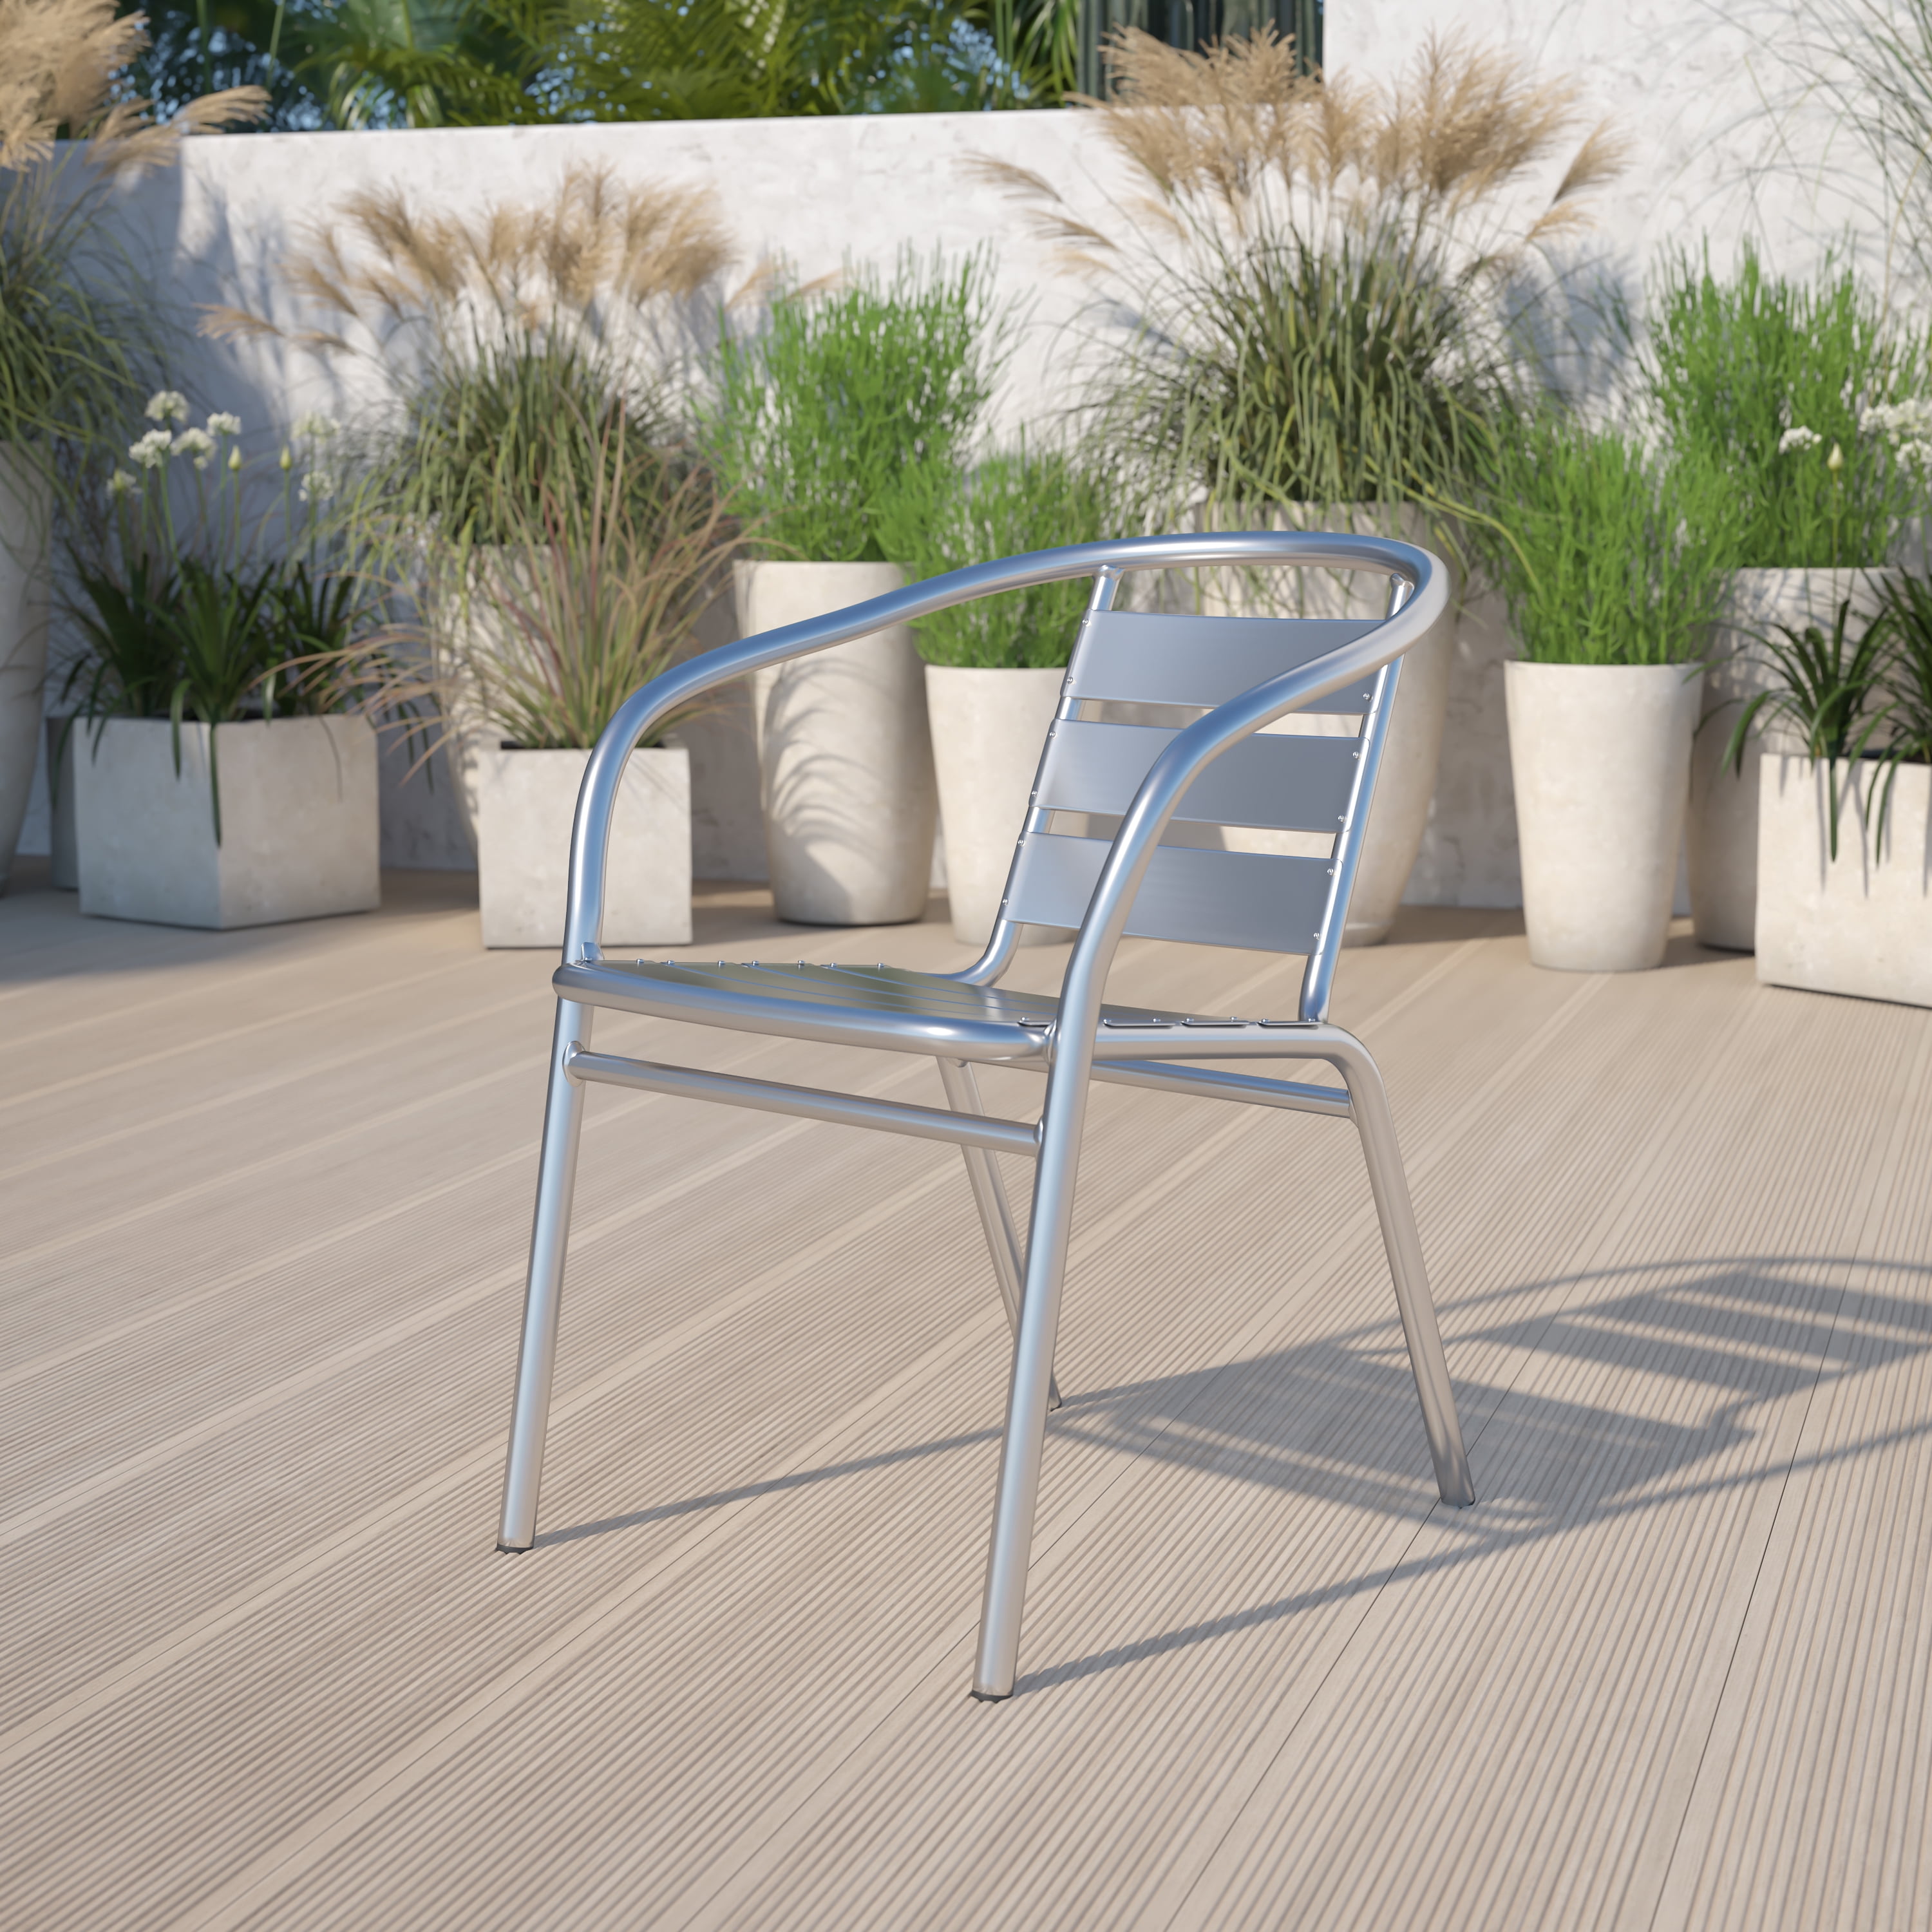 New Commercial Grade Aluminium Stacking Garden Patio Outdoor Chairs Cafe Bistro 